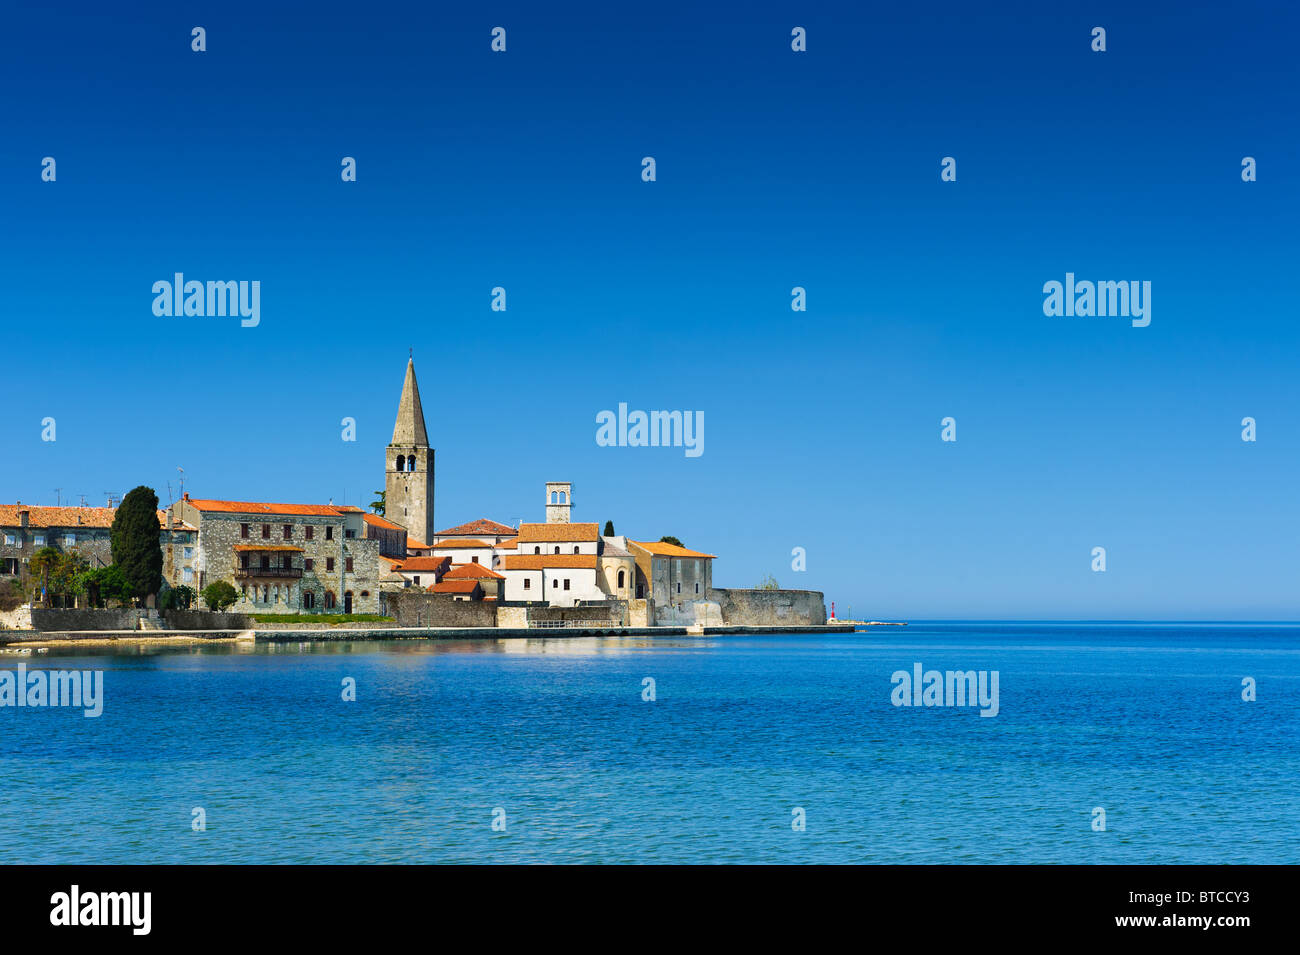 Porec - Adria Altstadt in Kroatien, Istrien Region. Beliebtes touristisches Ausflugsziel. Stockfoto